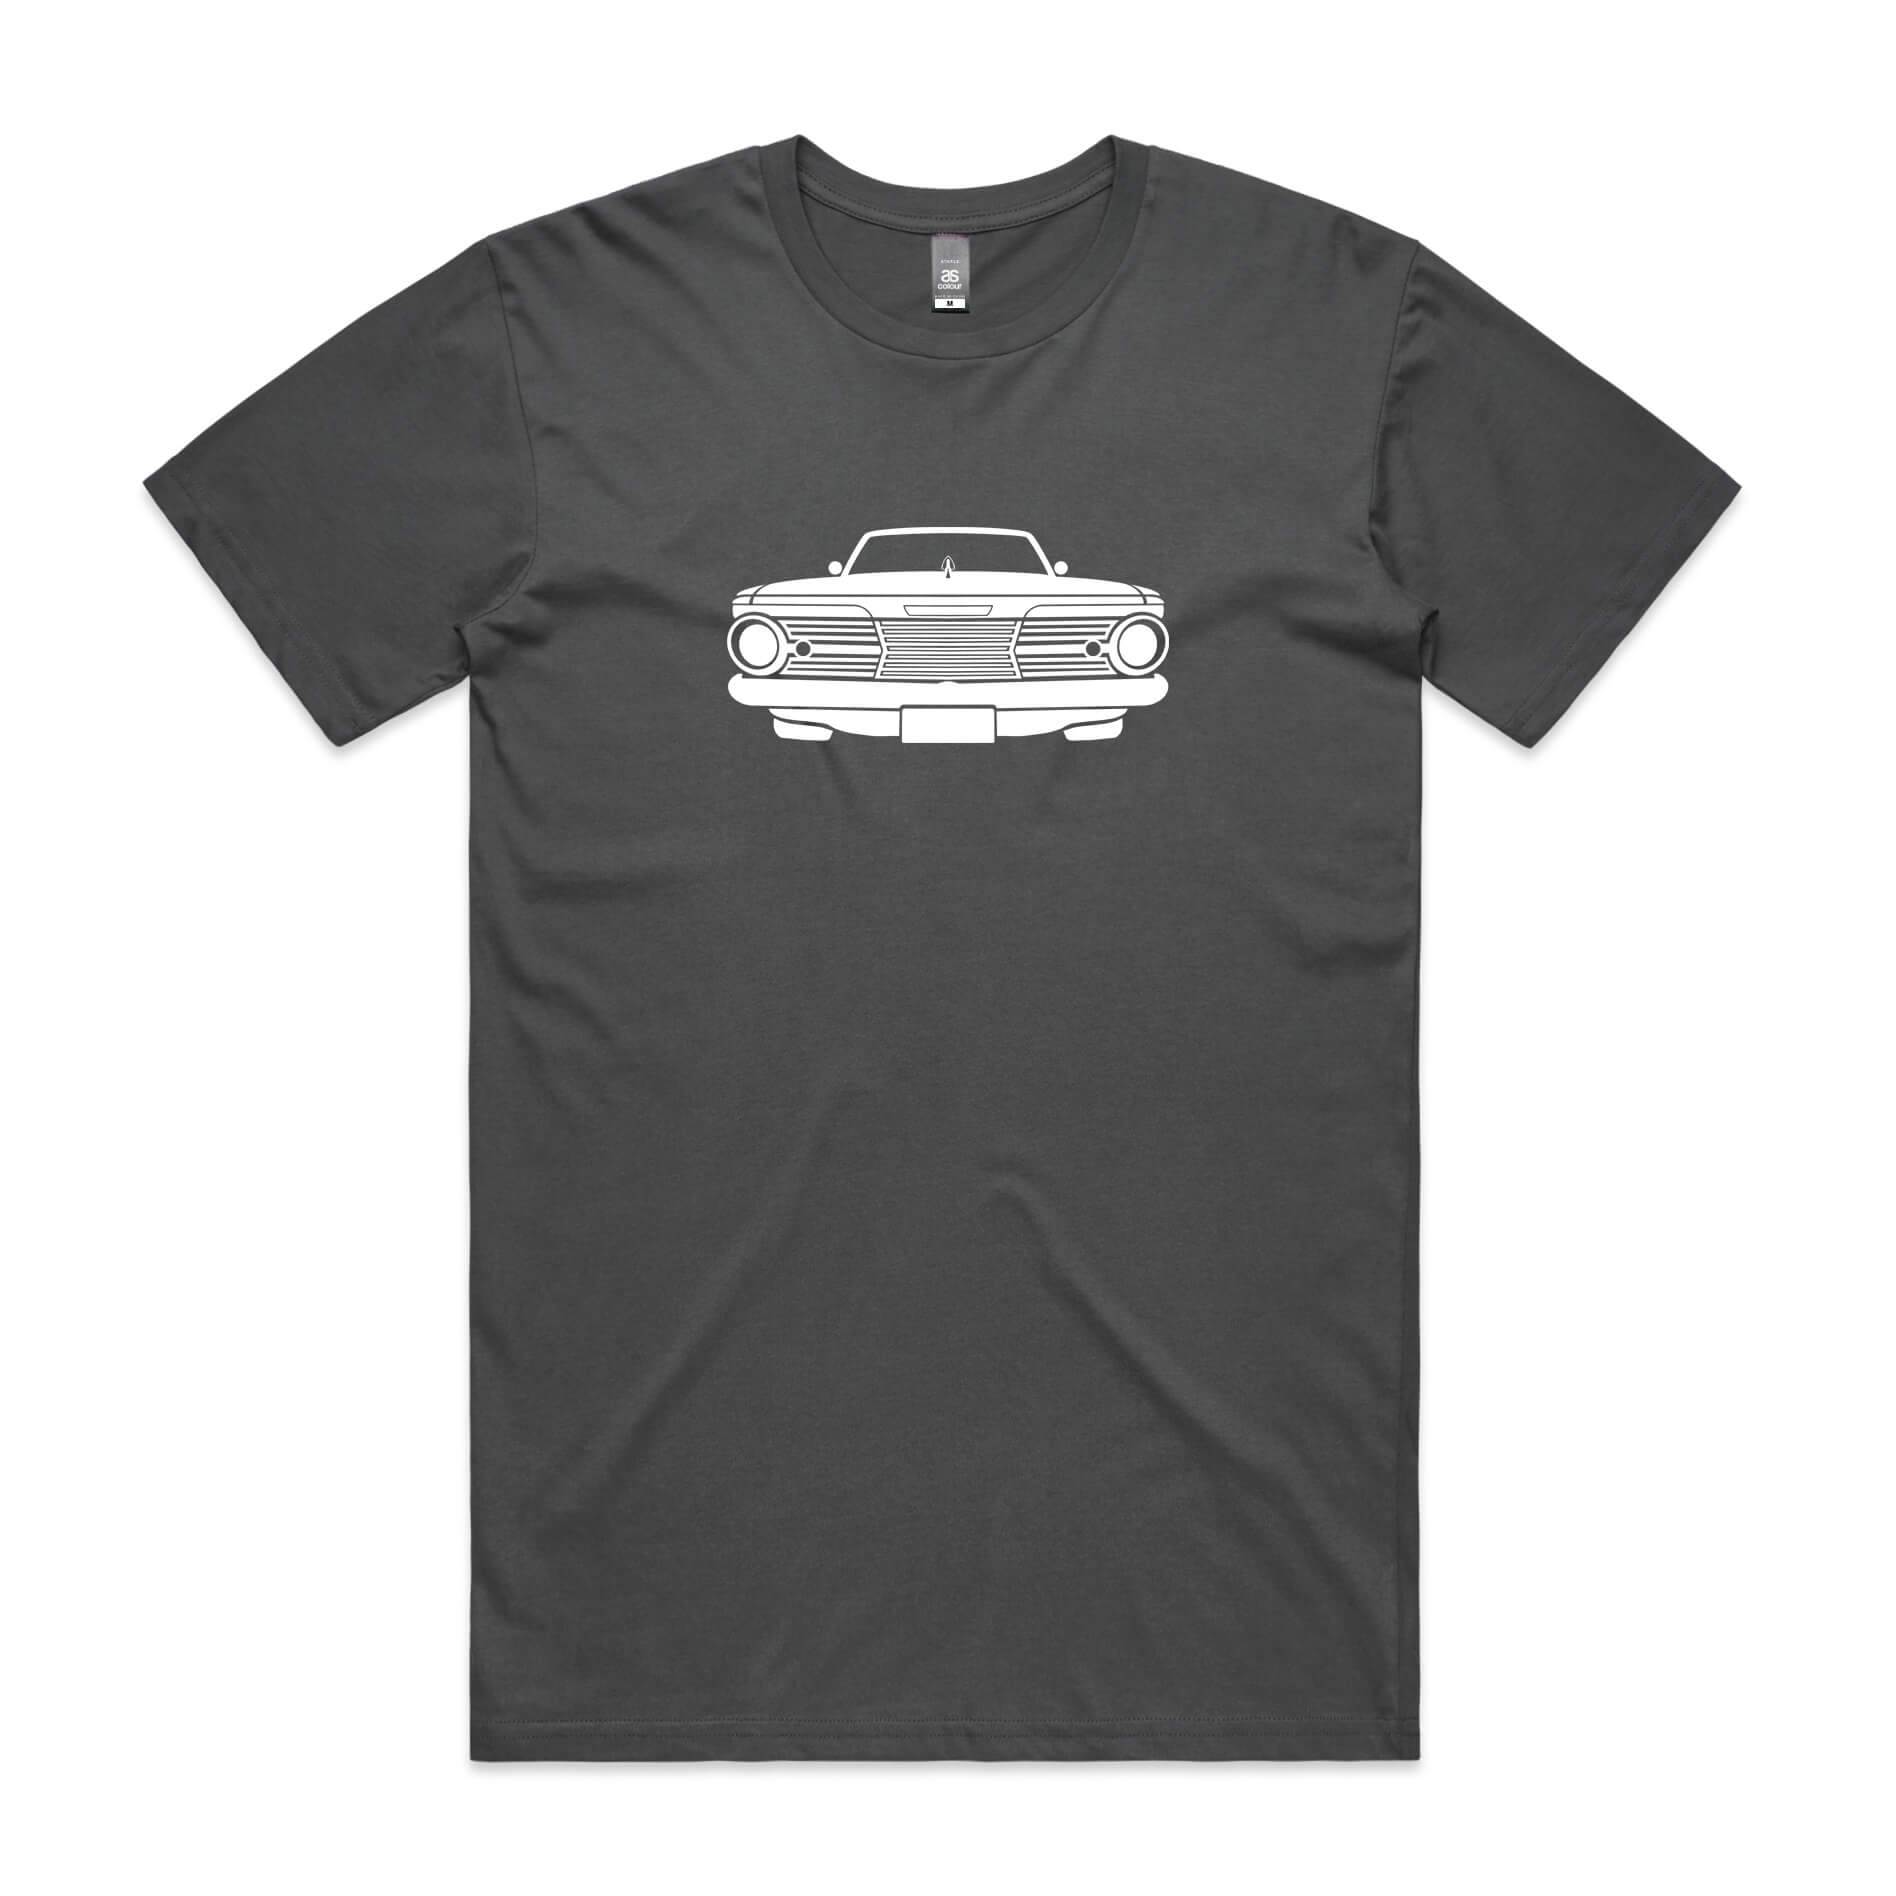 Chrysler Valiant AP6 t-shirt in charcoal grey